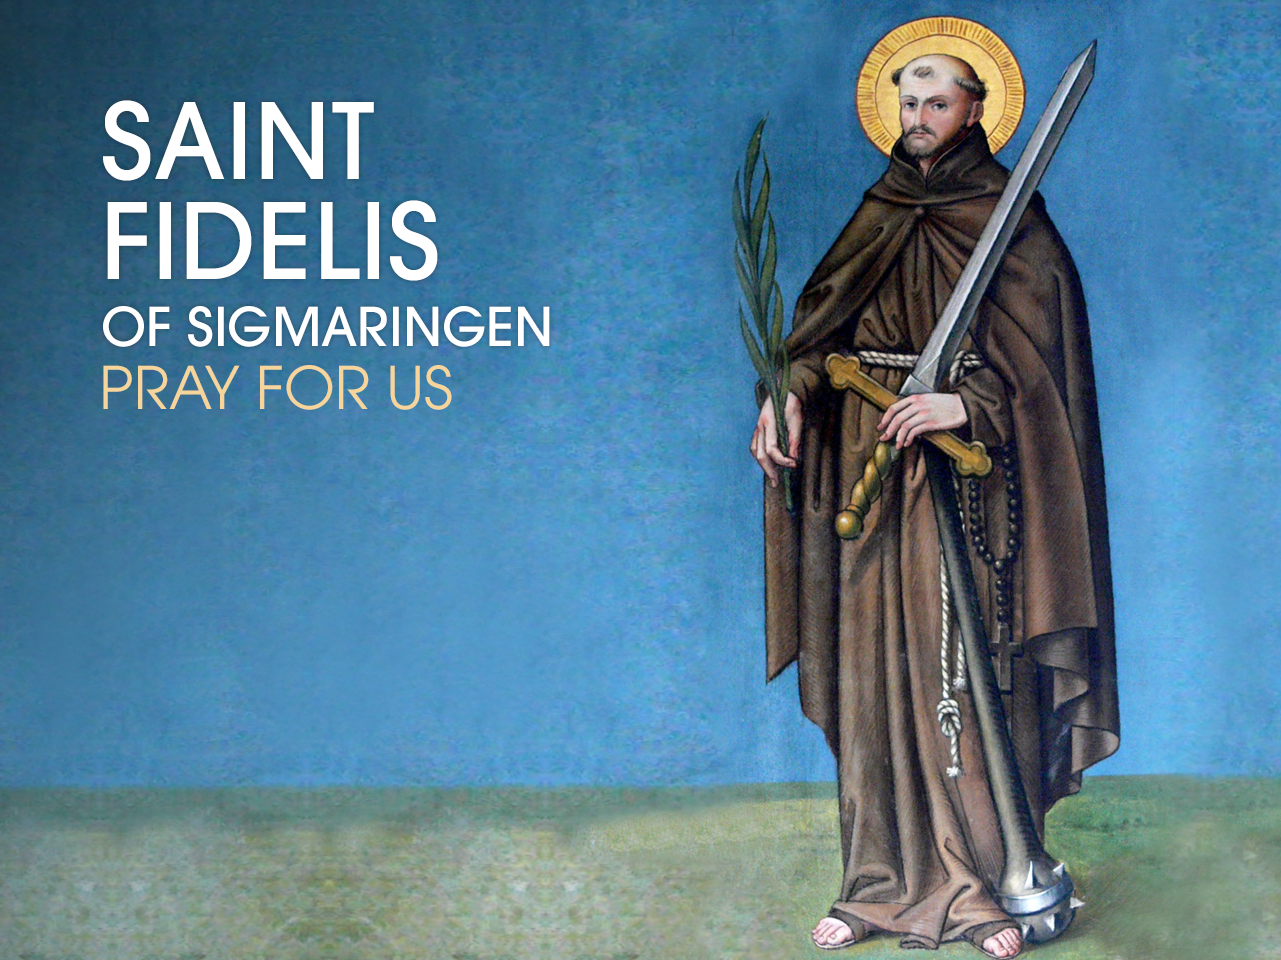 St. Fidelis of Sigmaringen